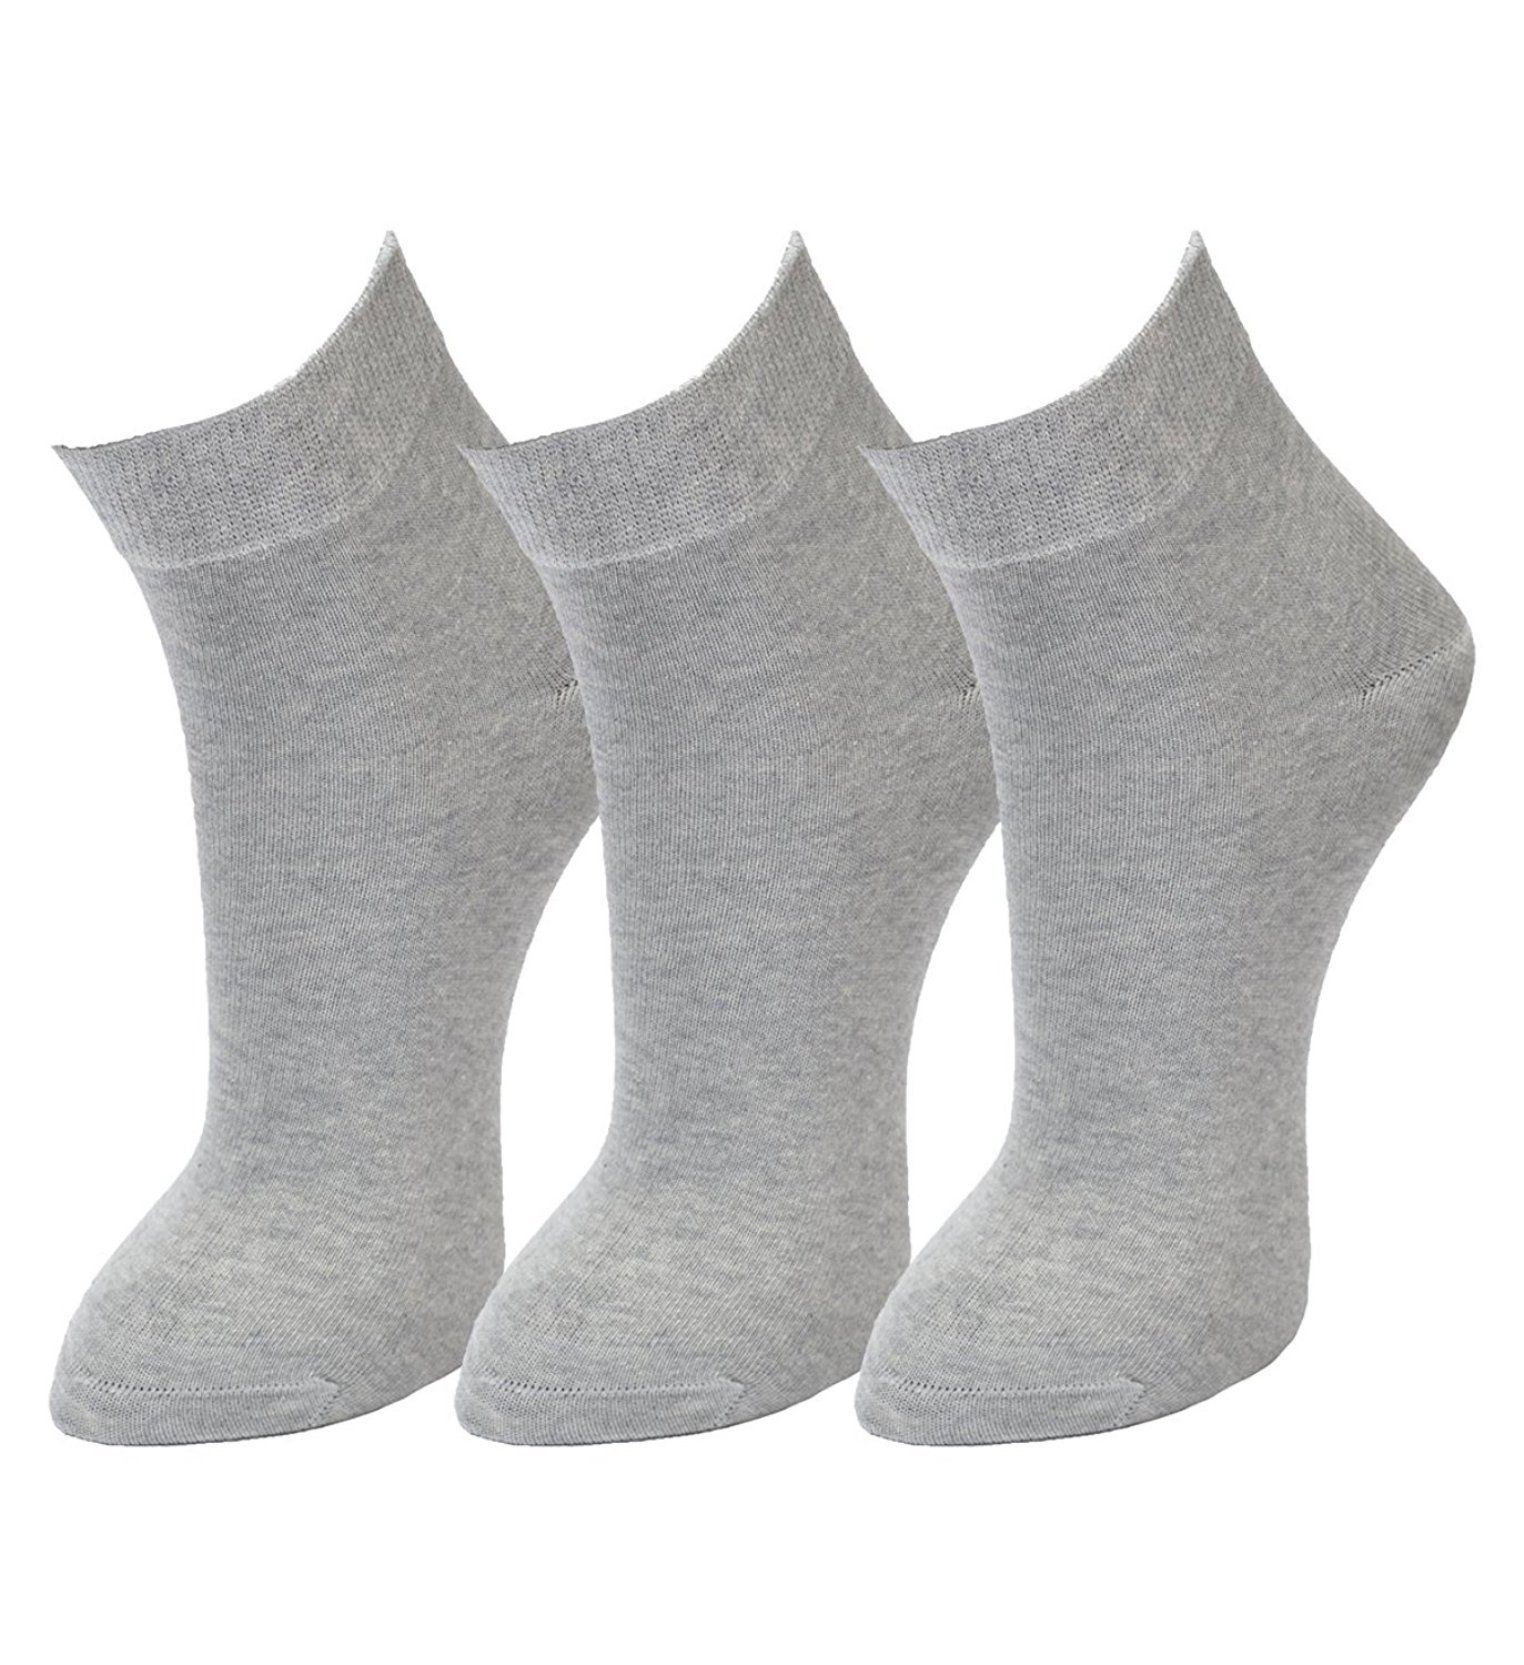     			Tahiro Grey Cotton Ankle Length Socks - Pack Of 3